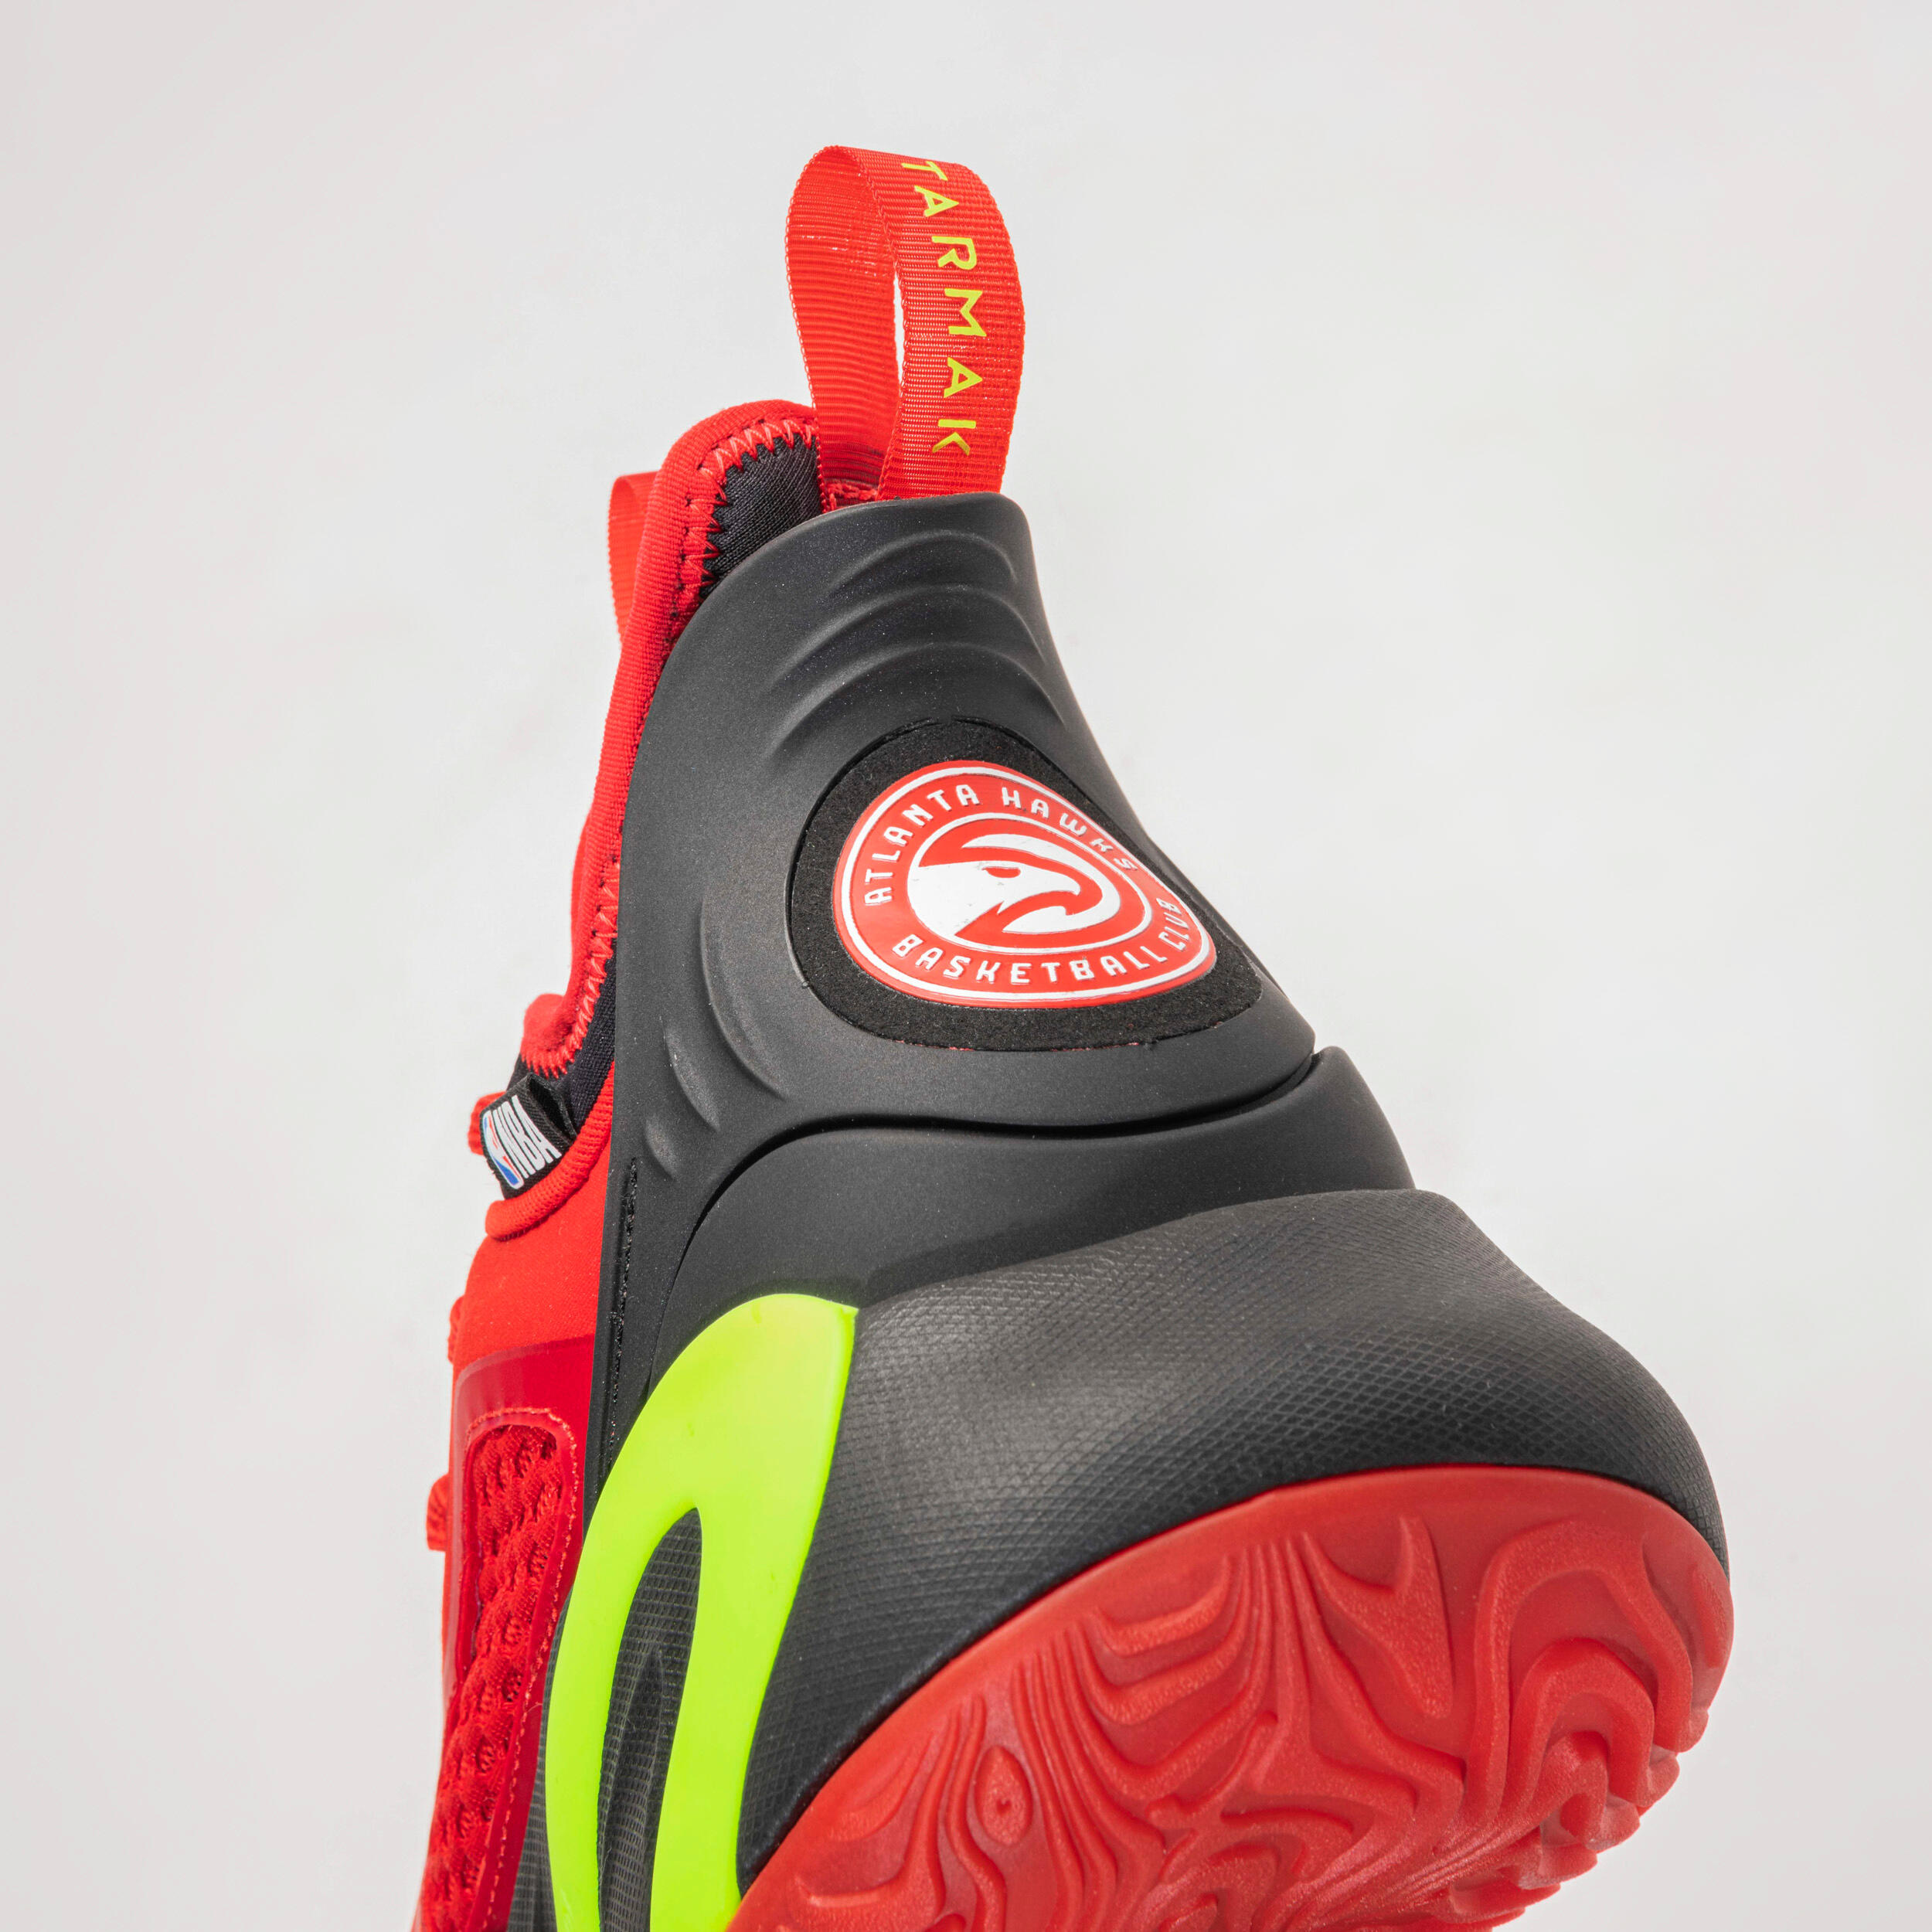 Men's/Women's Basketball Shoes SE900 - NBA Atlanta Hawks/Red 11/16